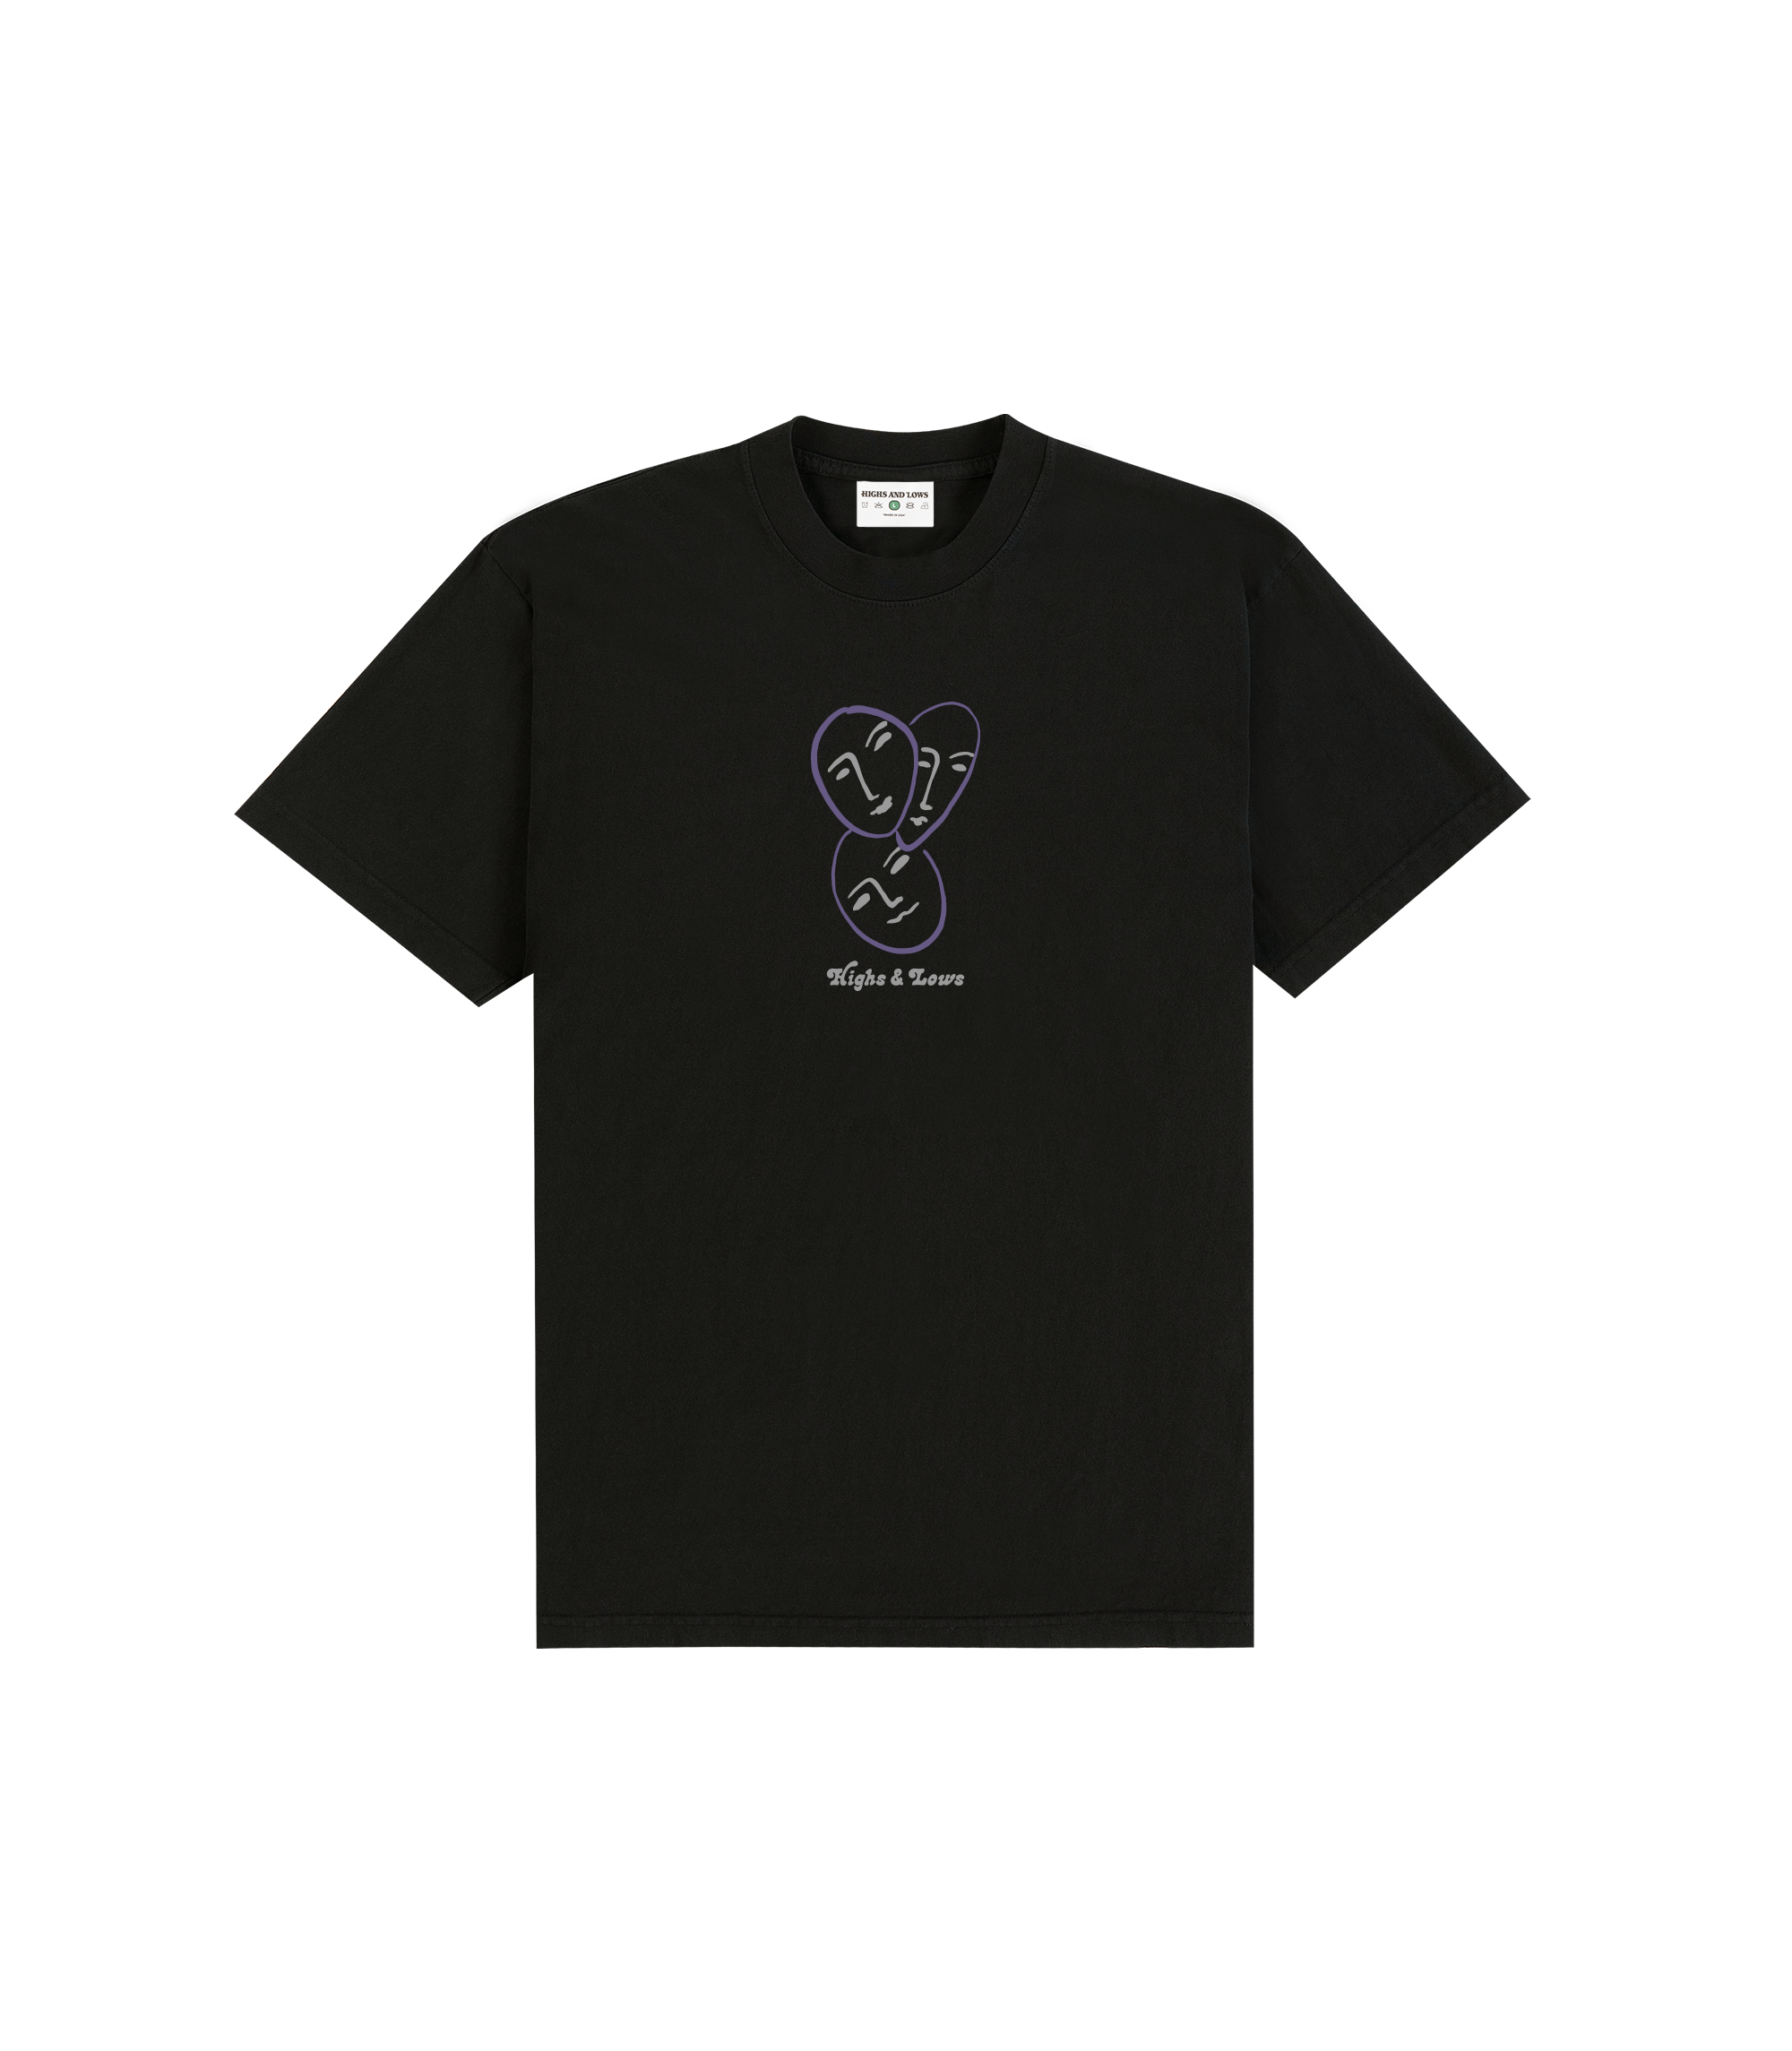 World Go Round T-shirt - Black